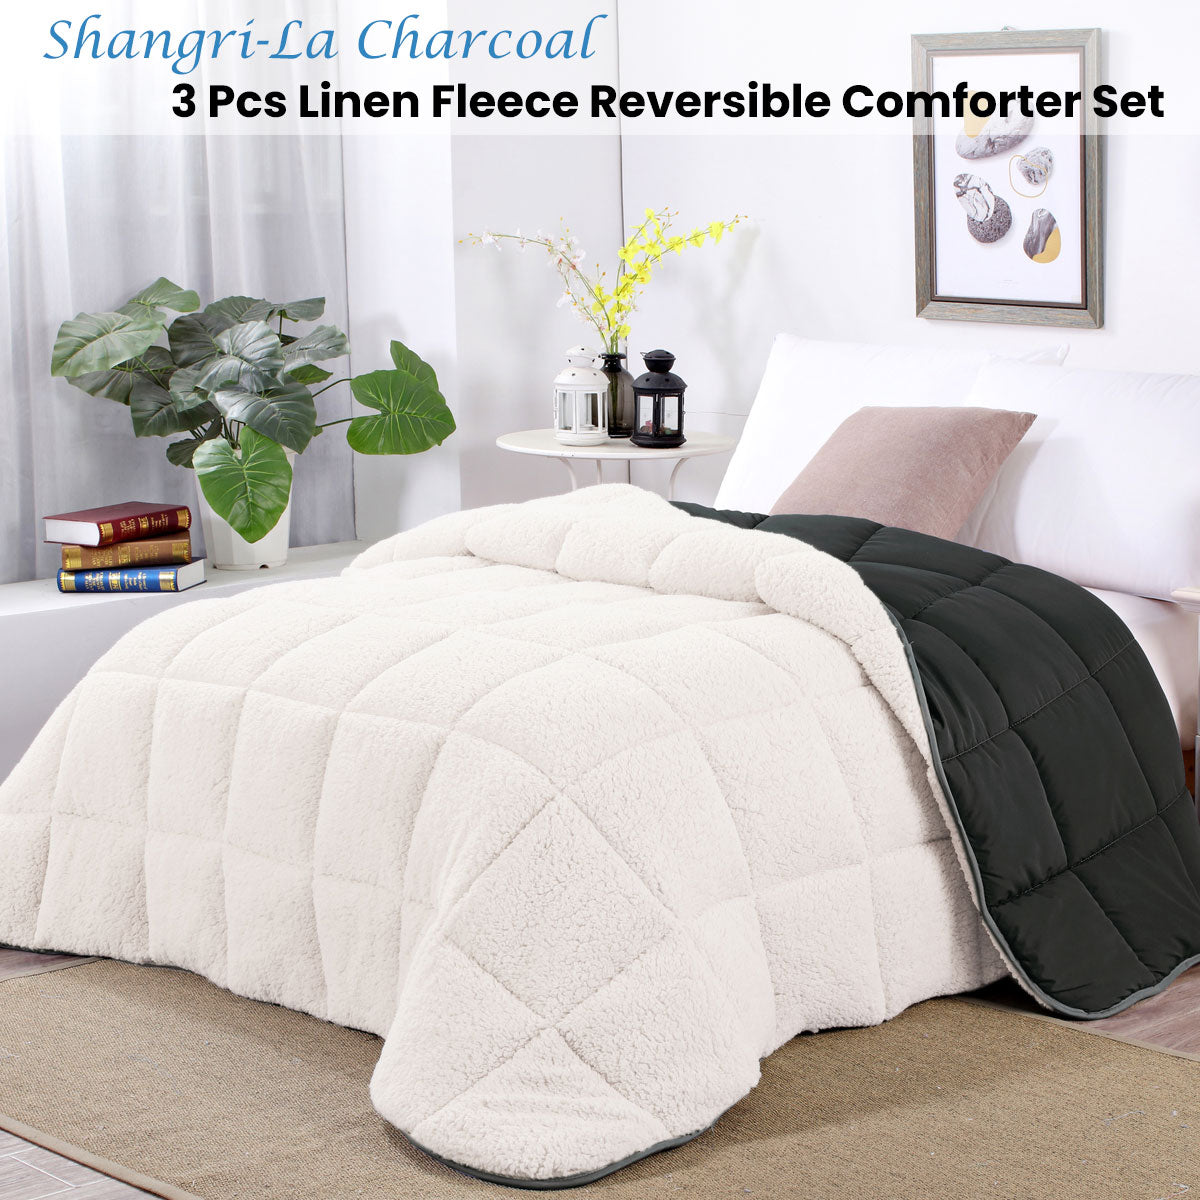 Queen Shangri La Charcoal Sherpa Fleece Reversible 3 Pcs Comforter Set - White/Black